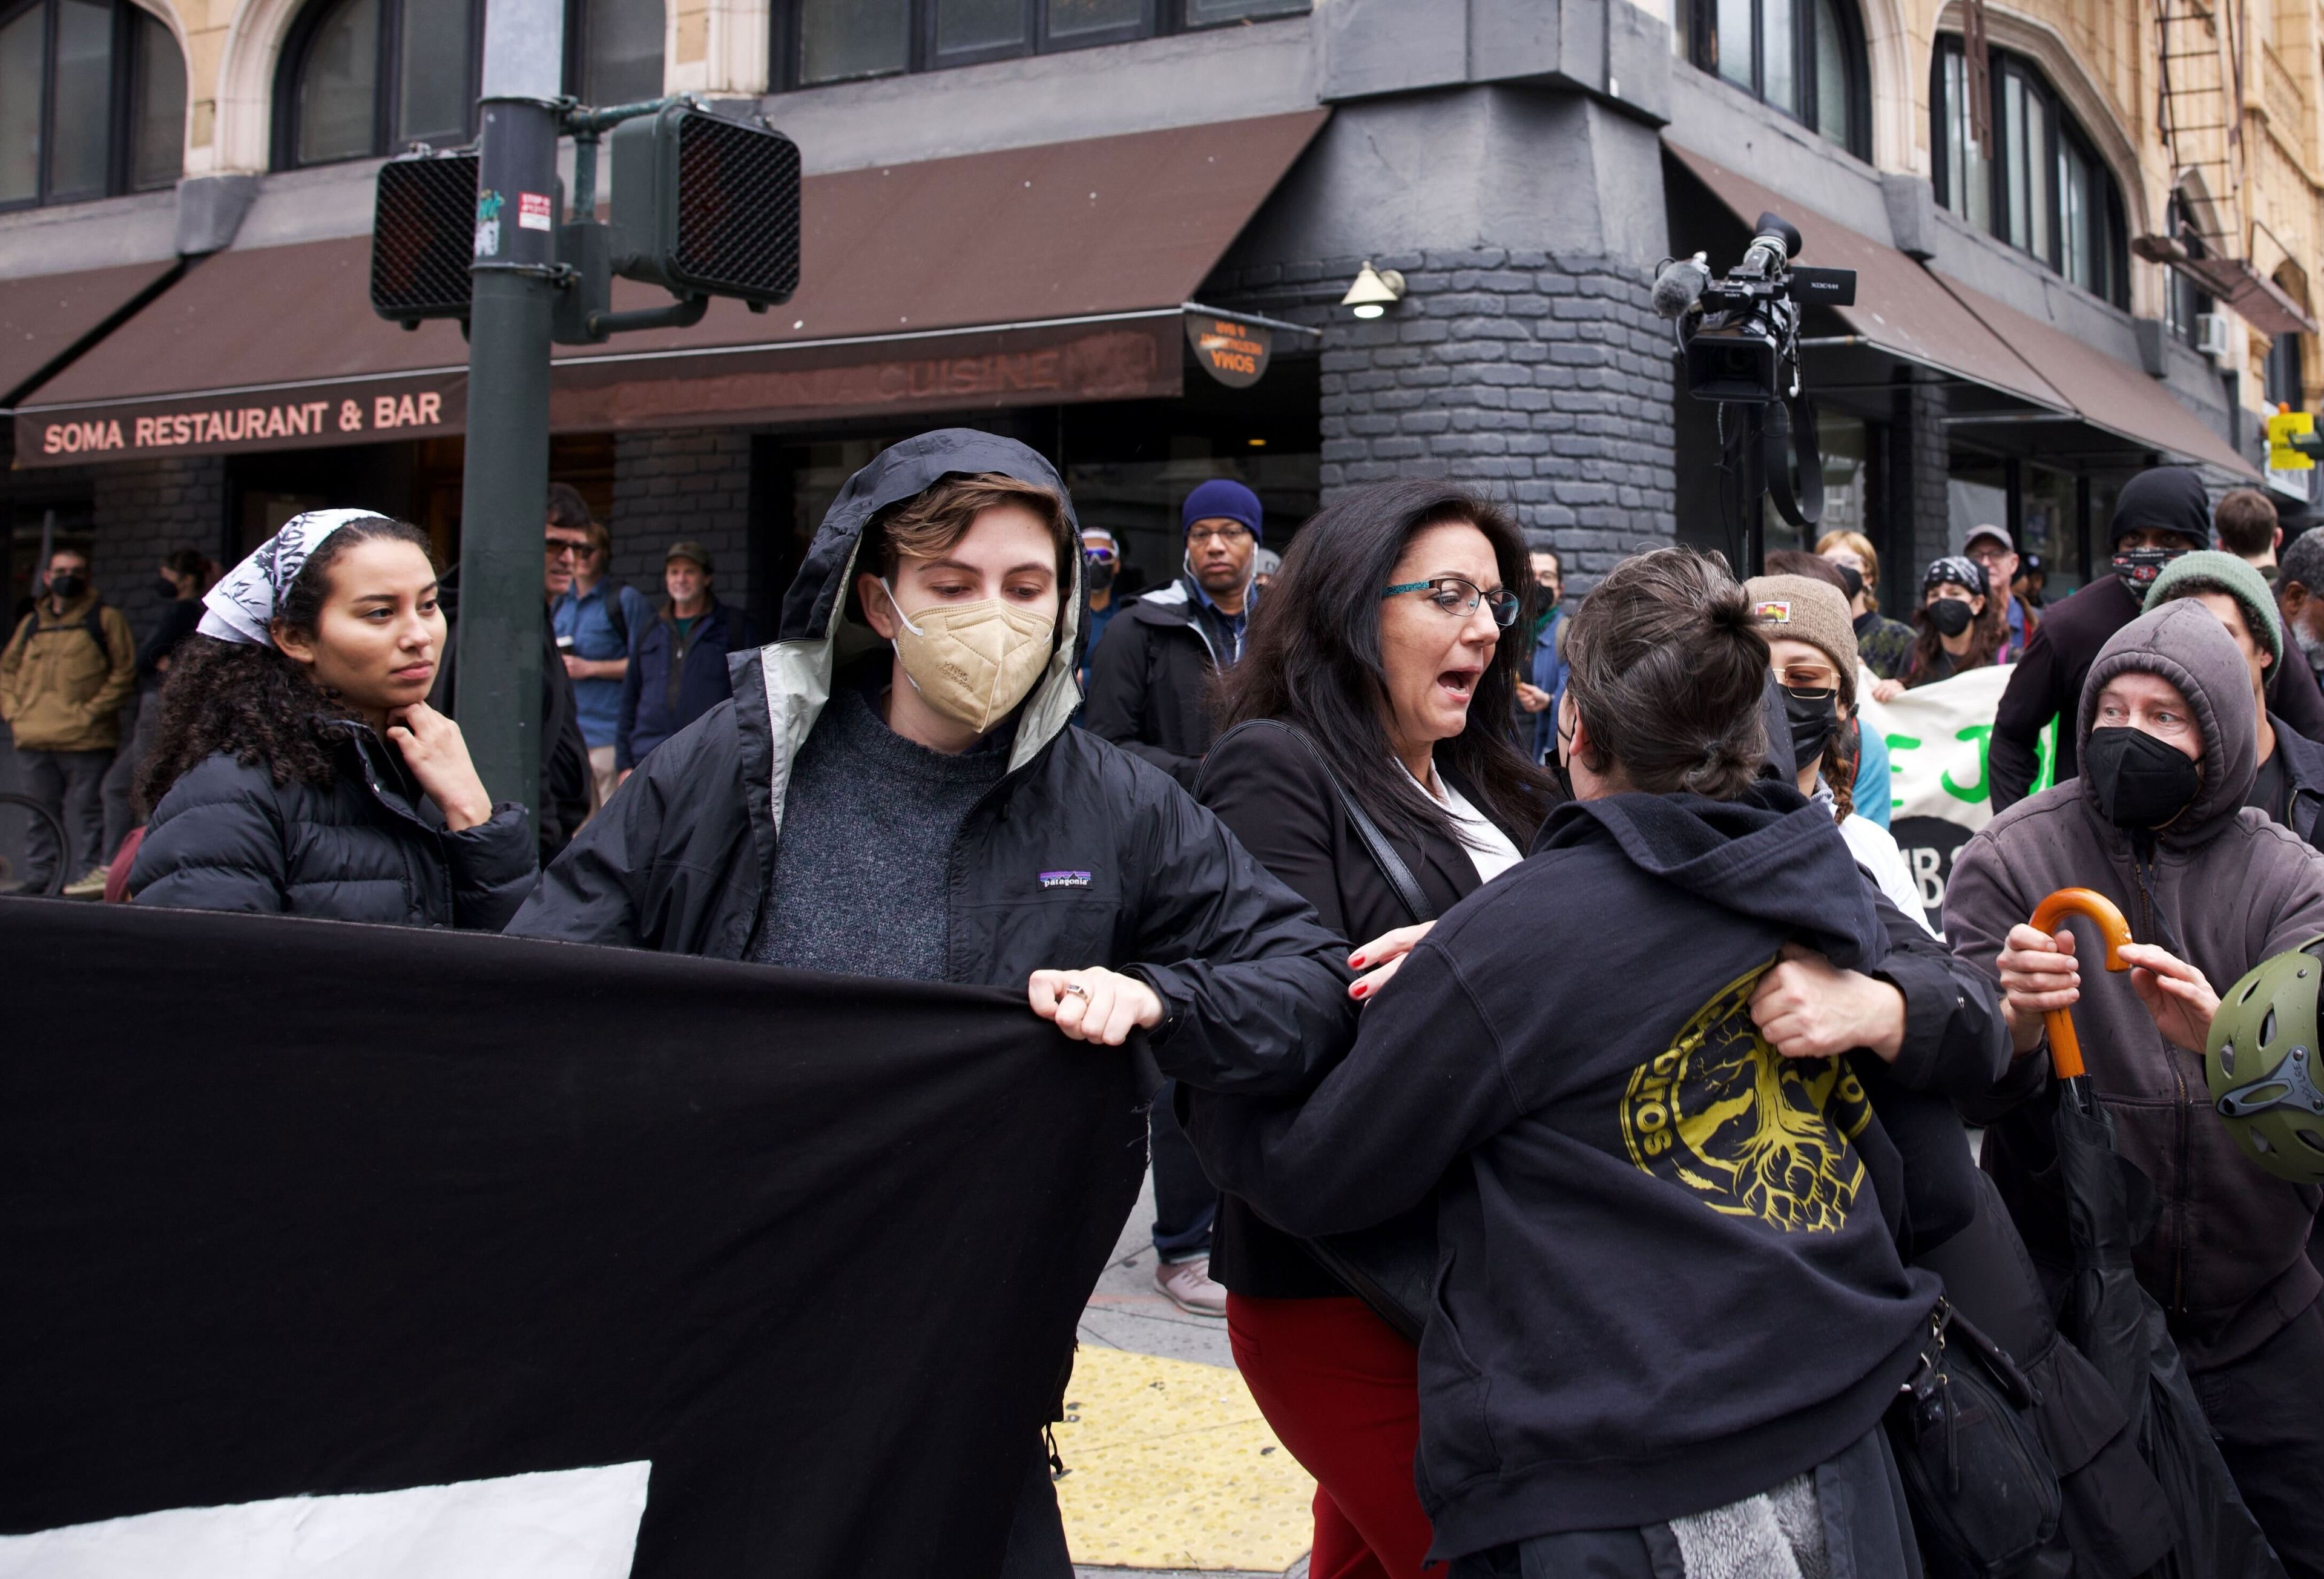 Protestors block an APEC participant from entering the area.